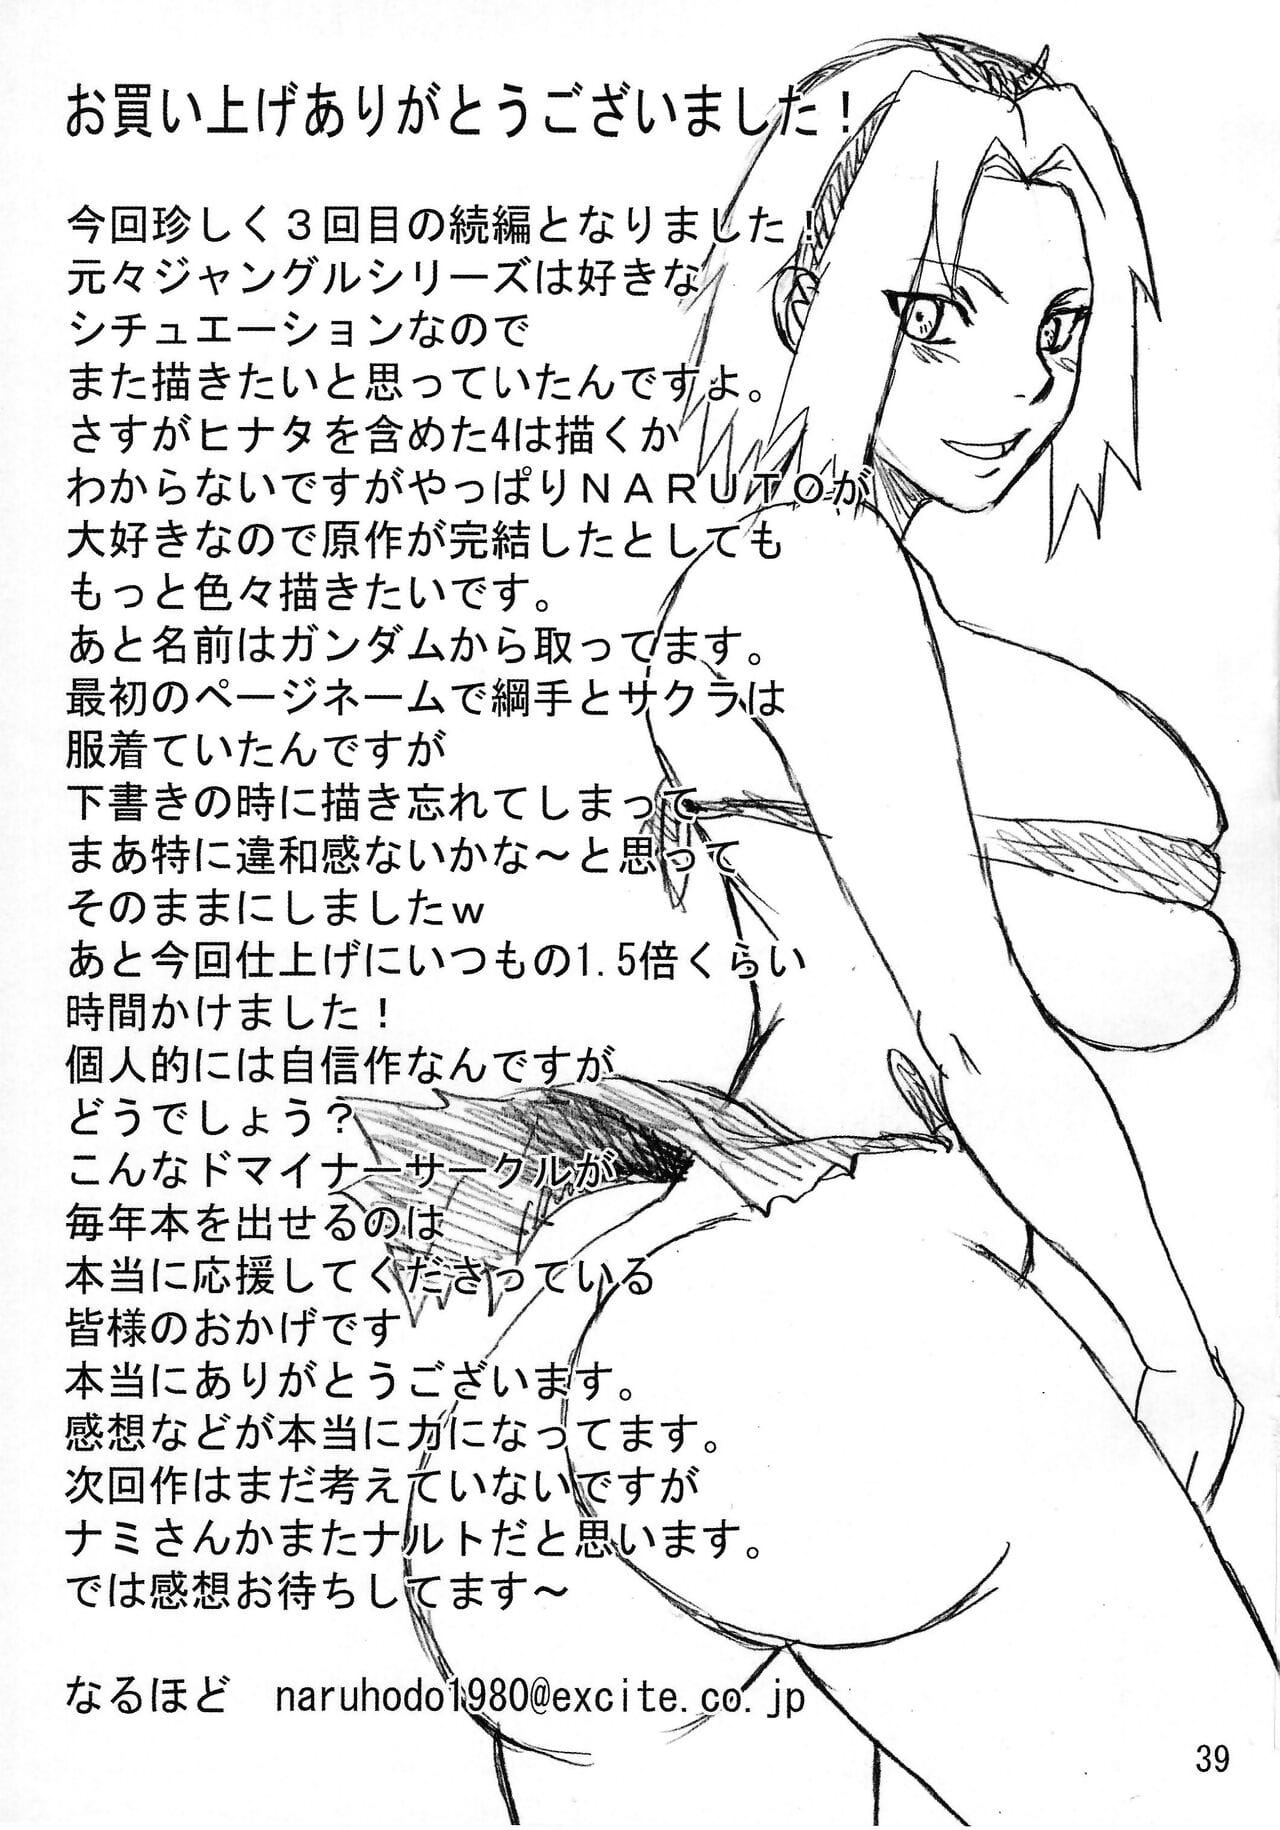 C86 Naruho-dou Naruhodo Jungle G3 Naruto English Re-drawn Colorized - part 2